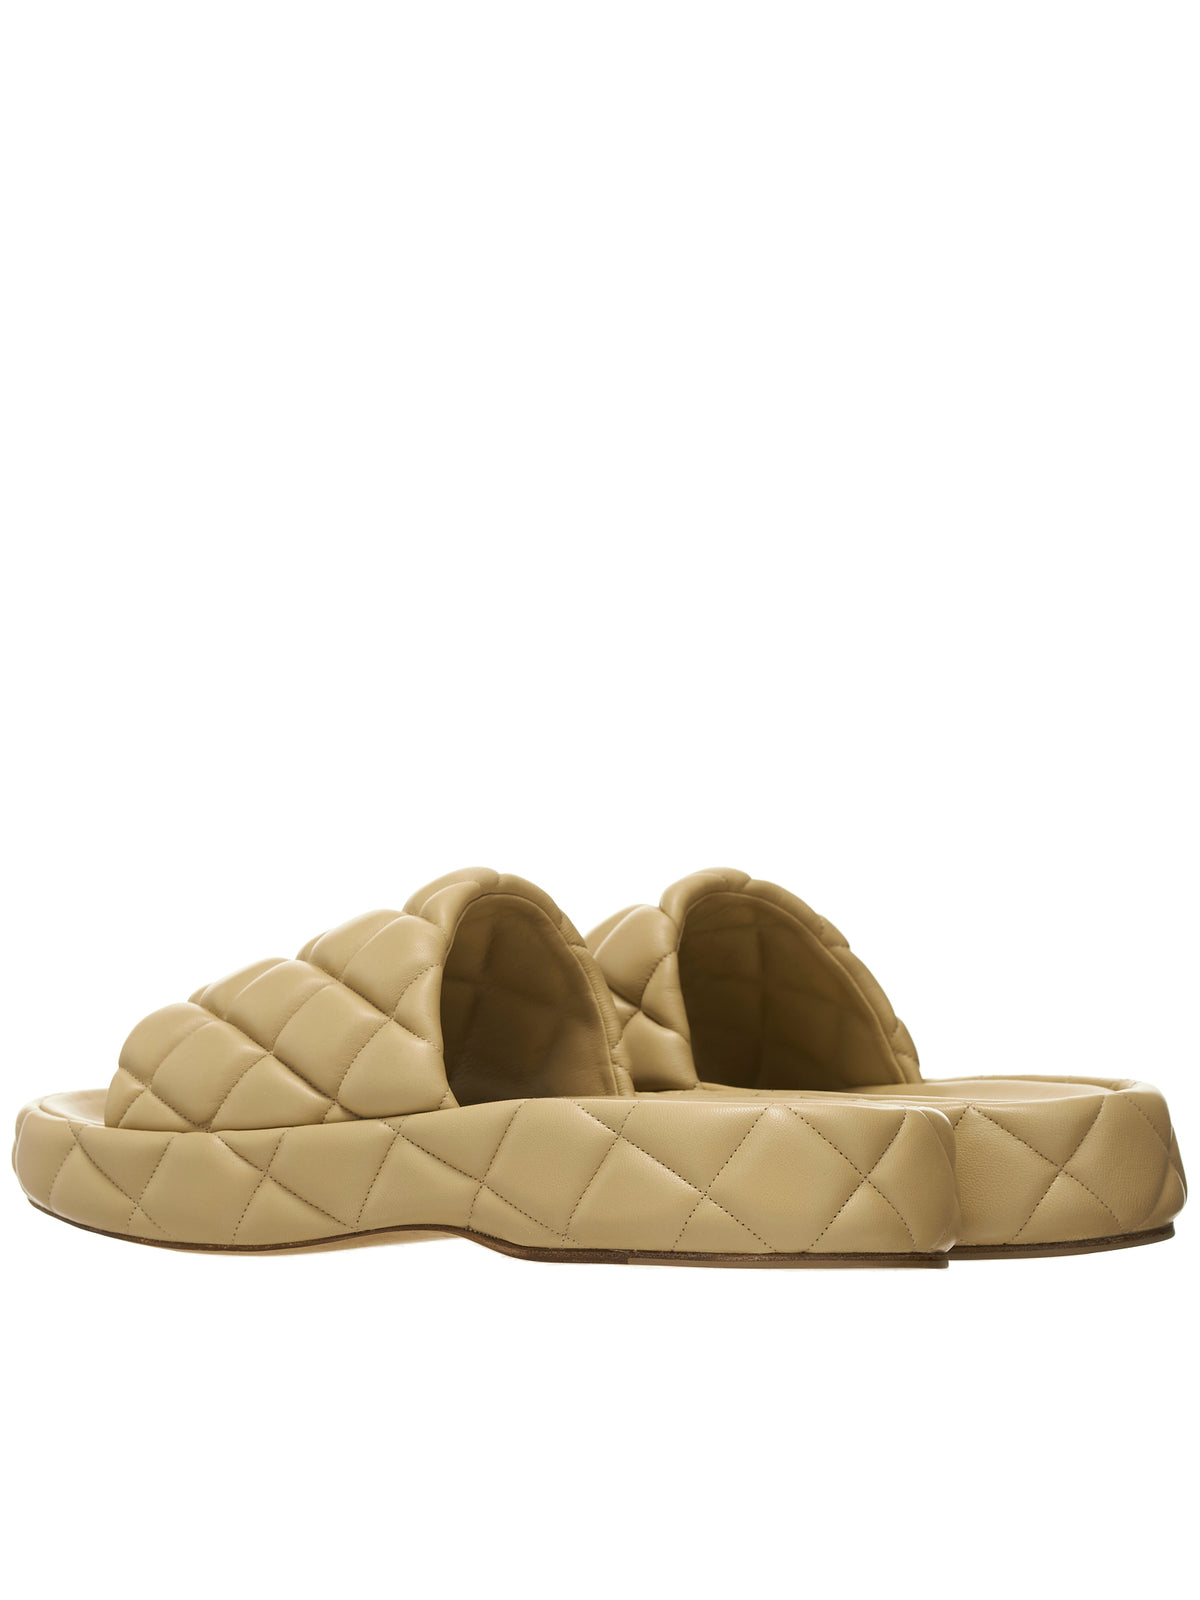 Bottega Veneta Padded Sandals | H. Lorenzo - detail 2